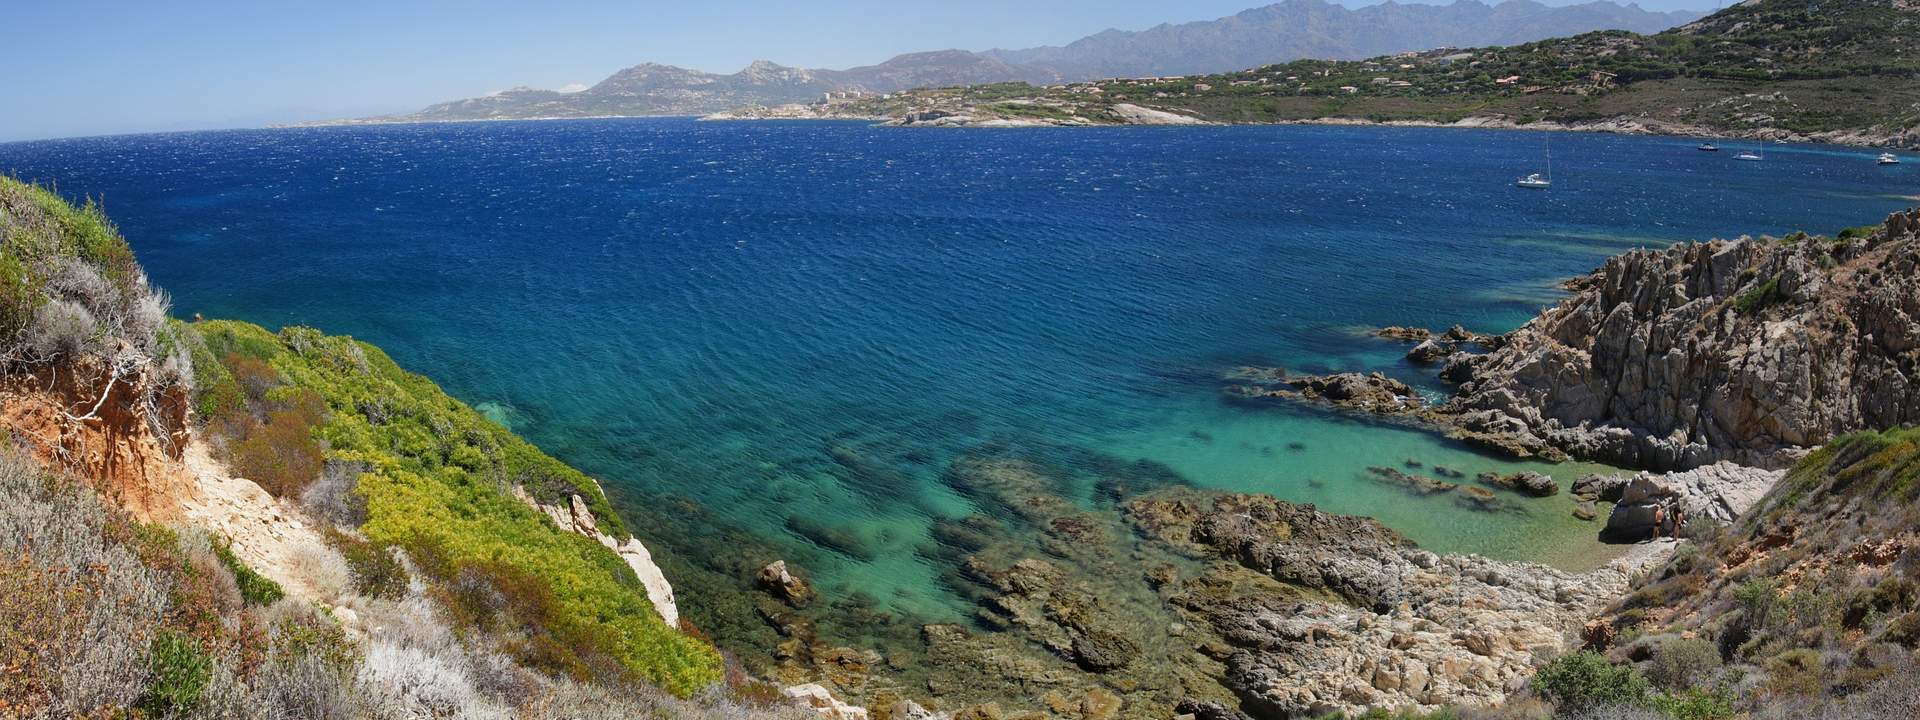 Dolce Corsica, dreamy mediterranean island